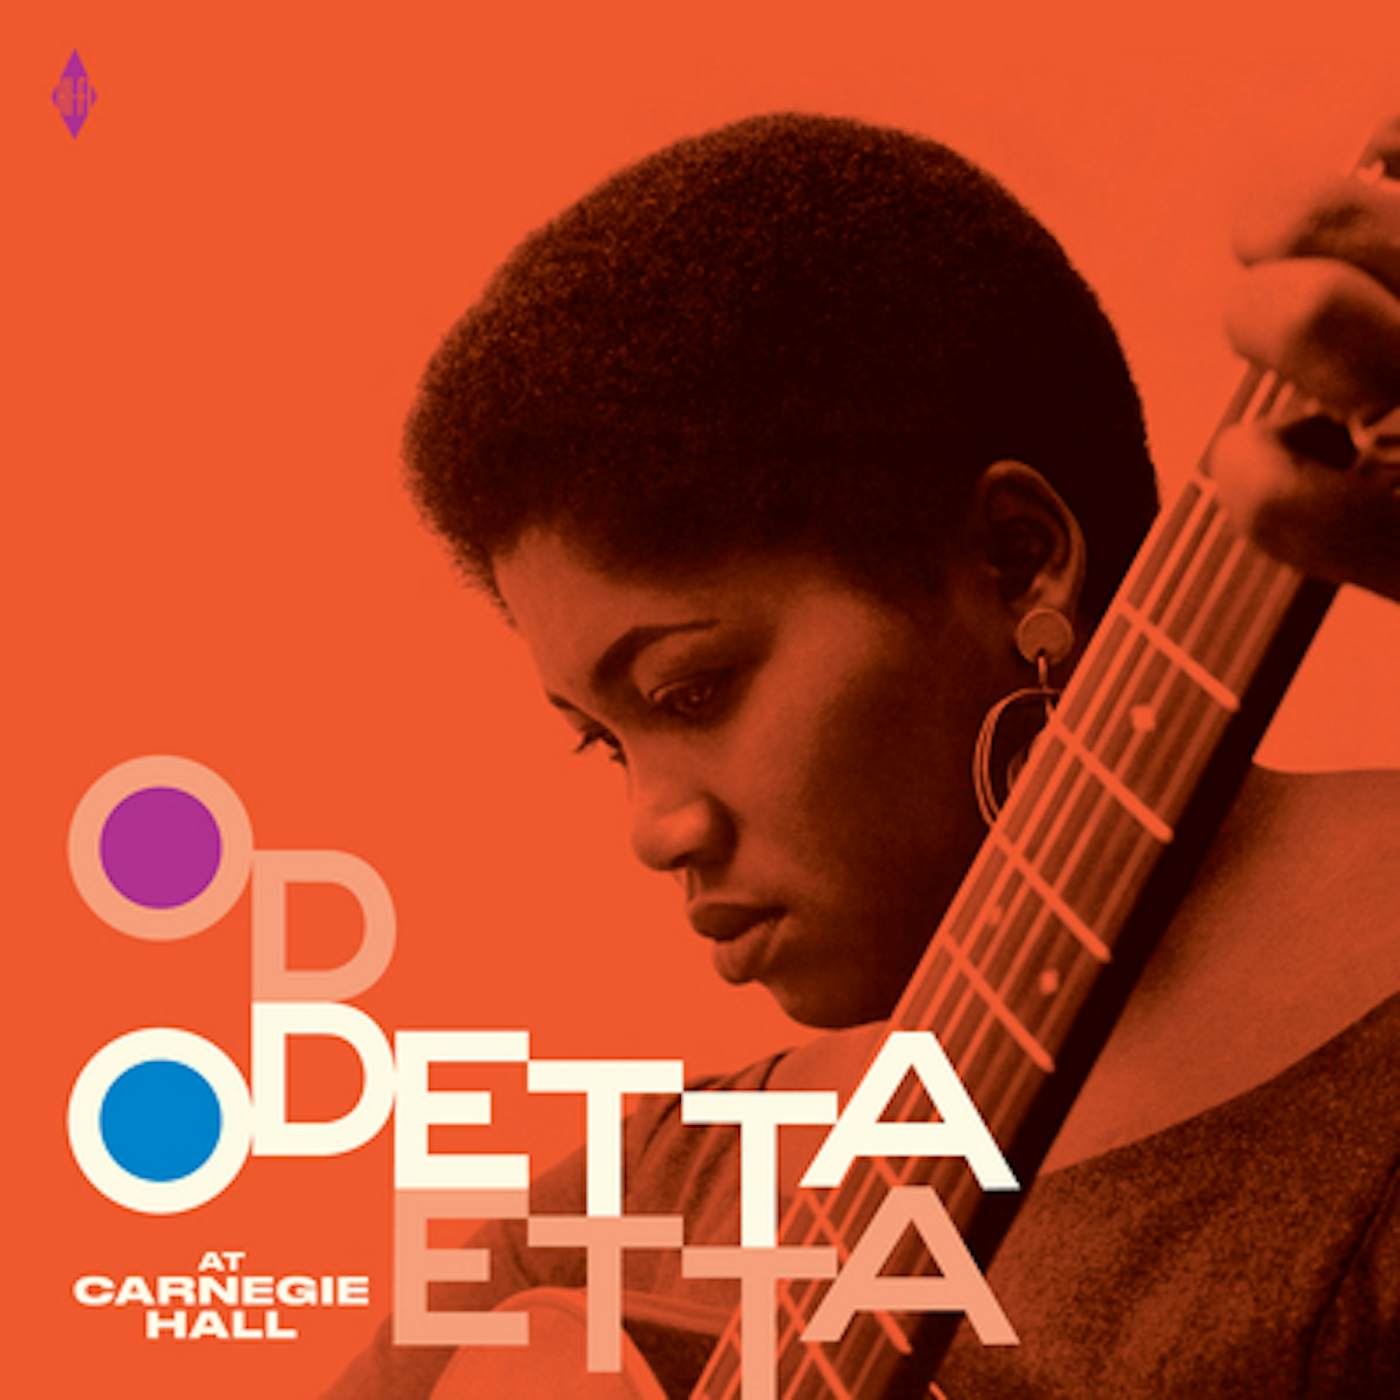 Odetta AT CARNEGIE HALL + 2 BONUS TRACKS Vinyl Record